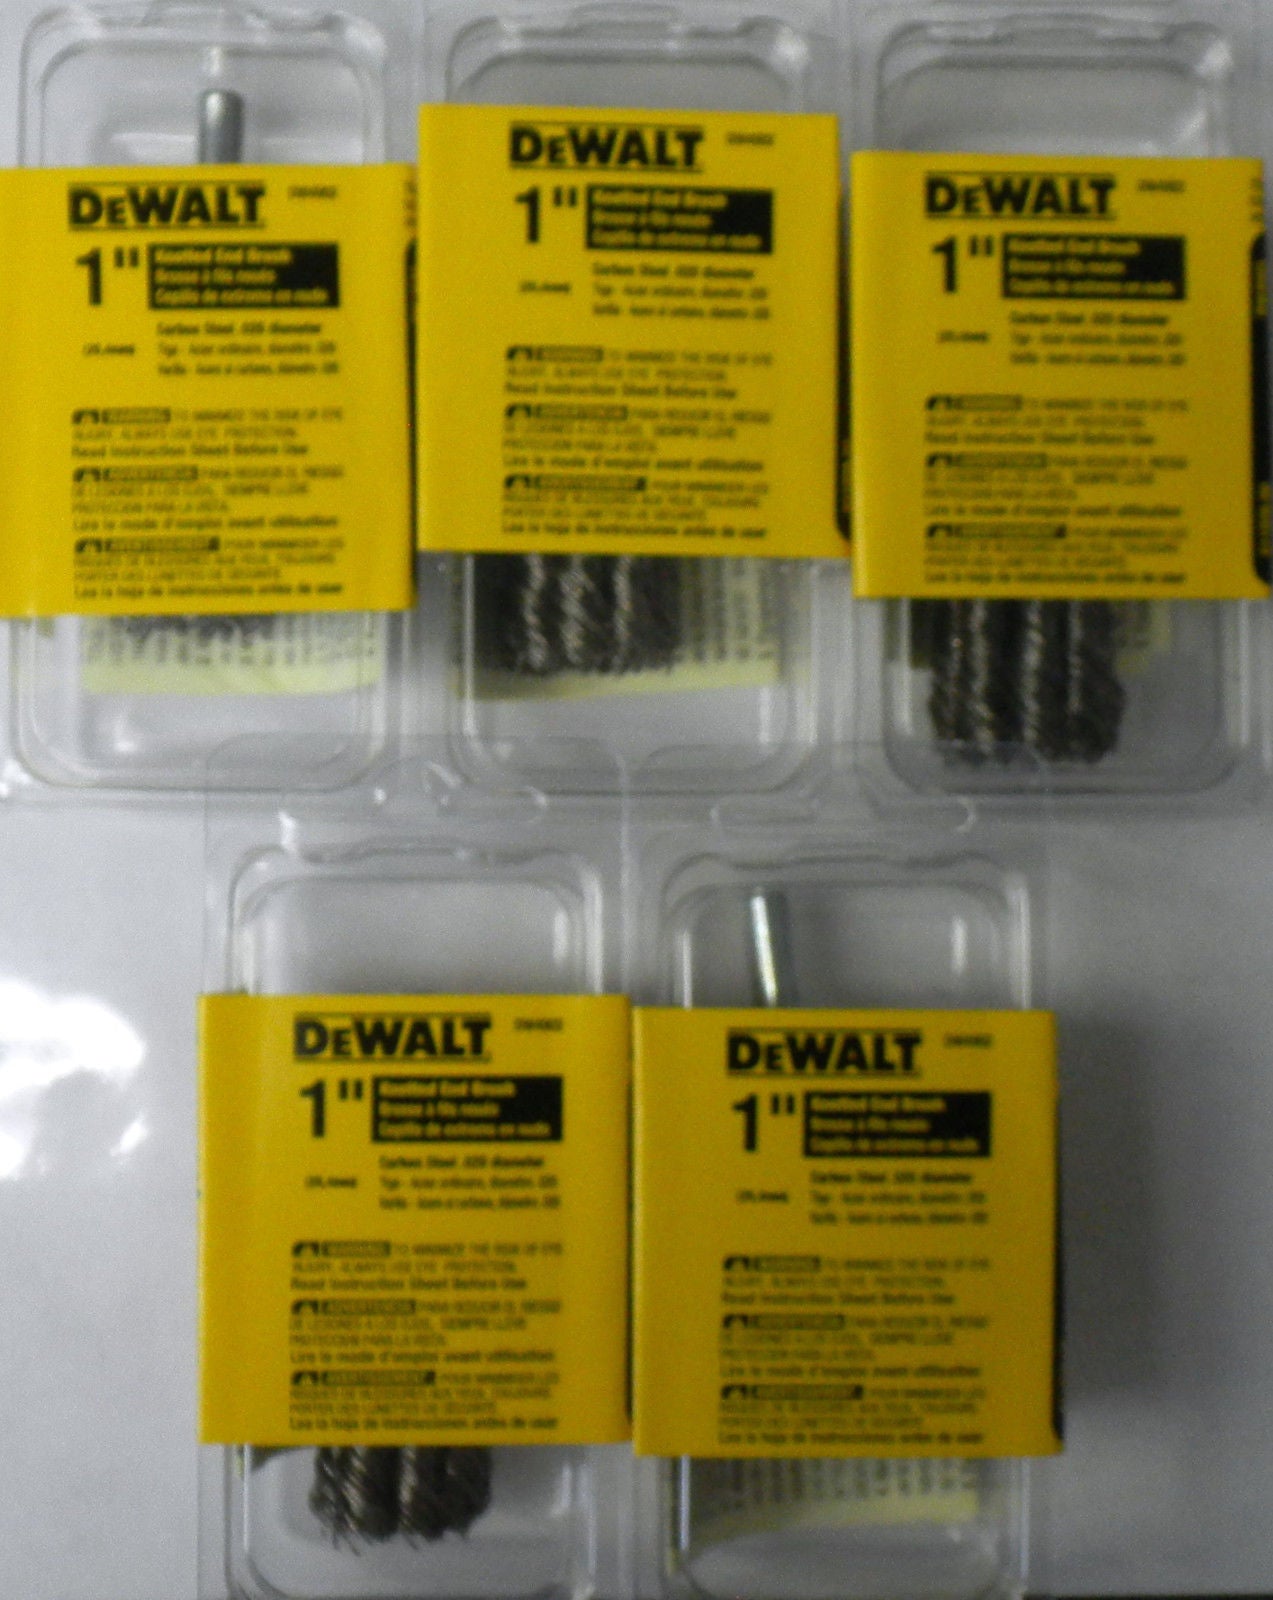 DeWalt DW4902-5 1" Knot End Brush Carbonsteel 1/4 Stem 5pcs.